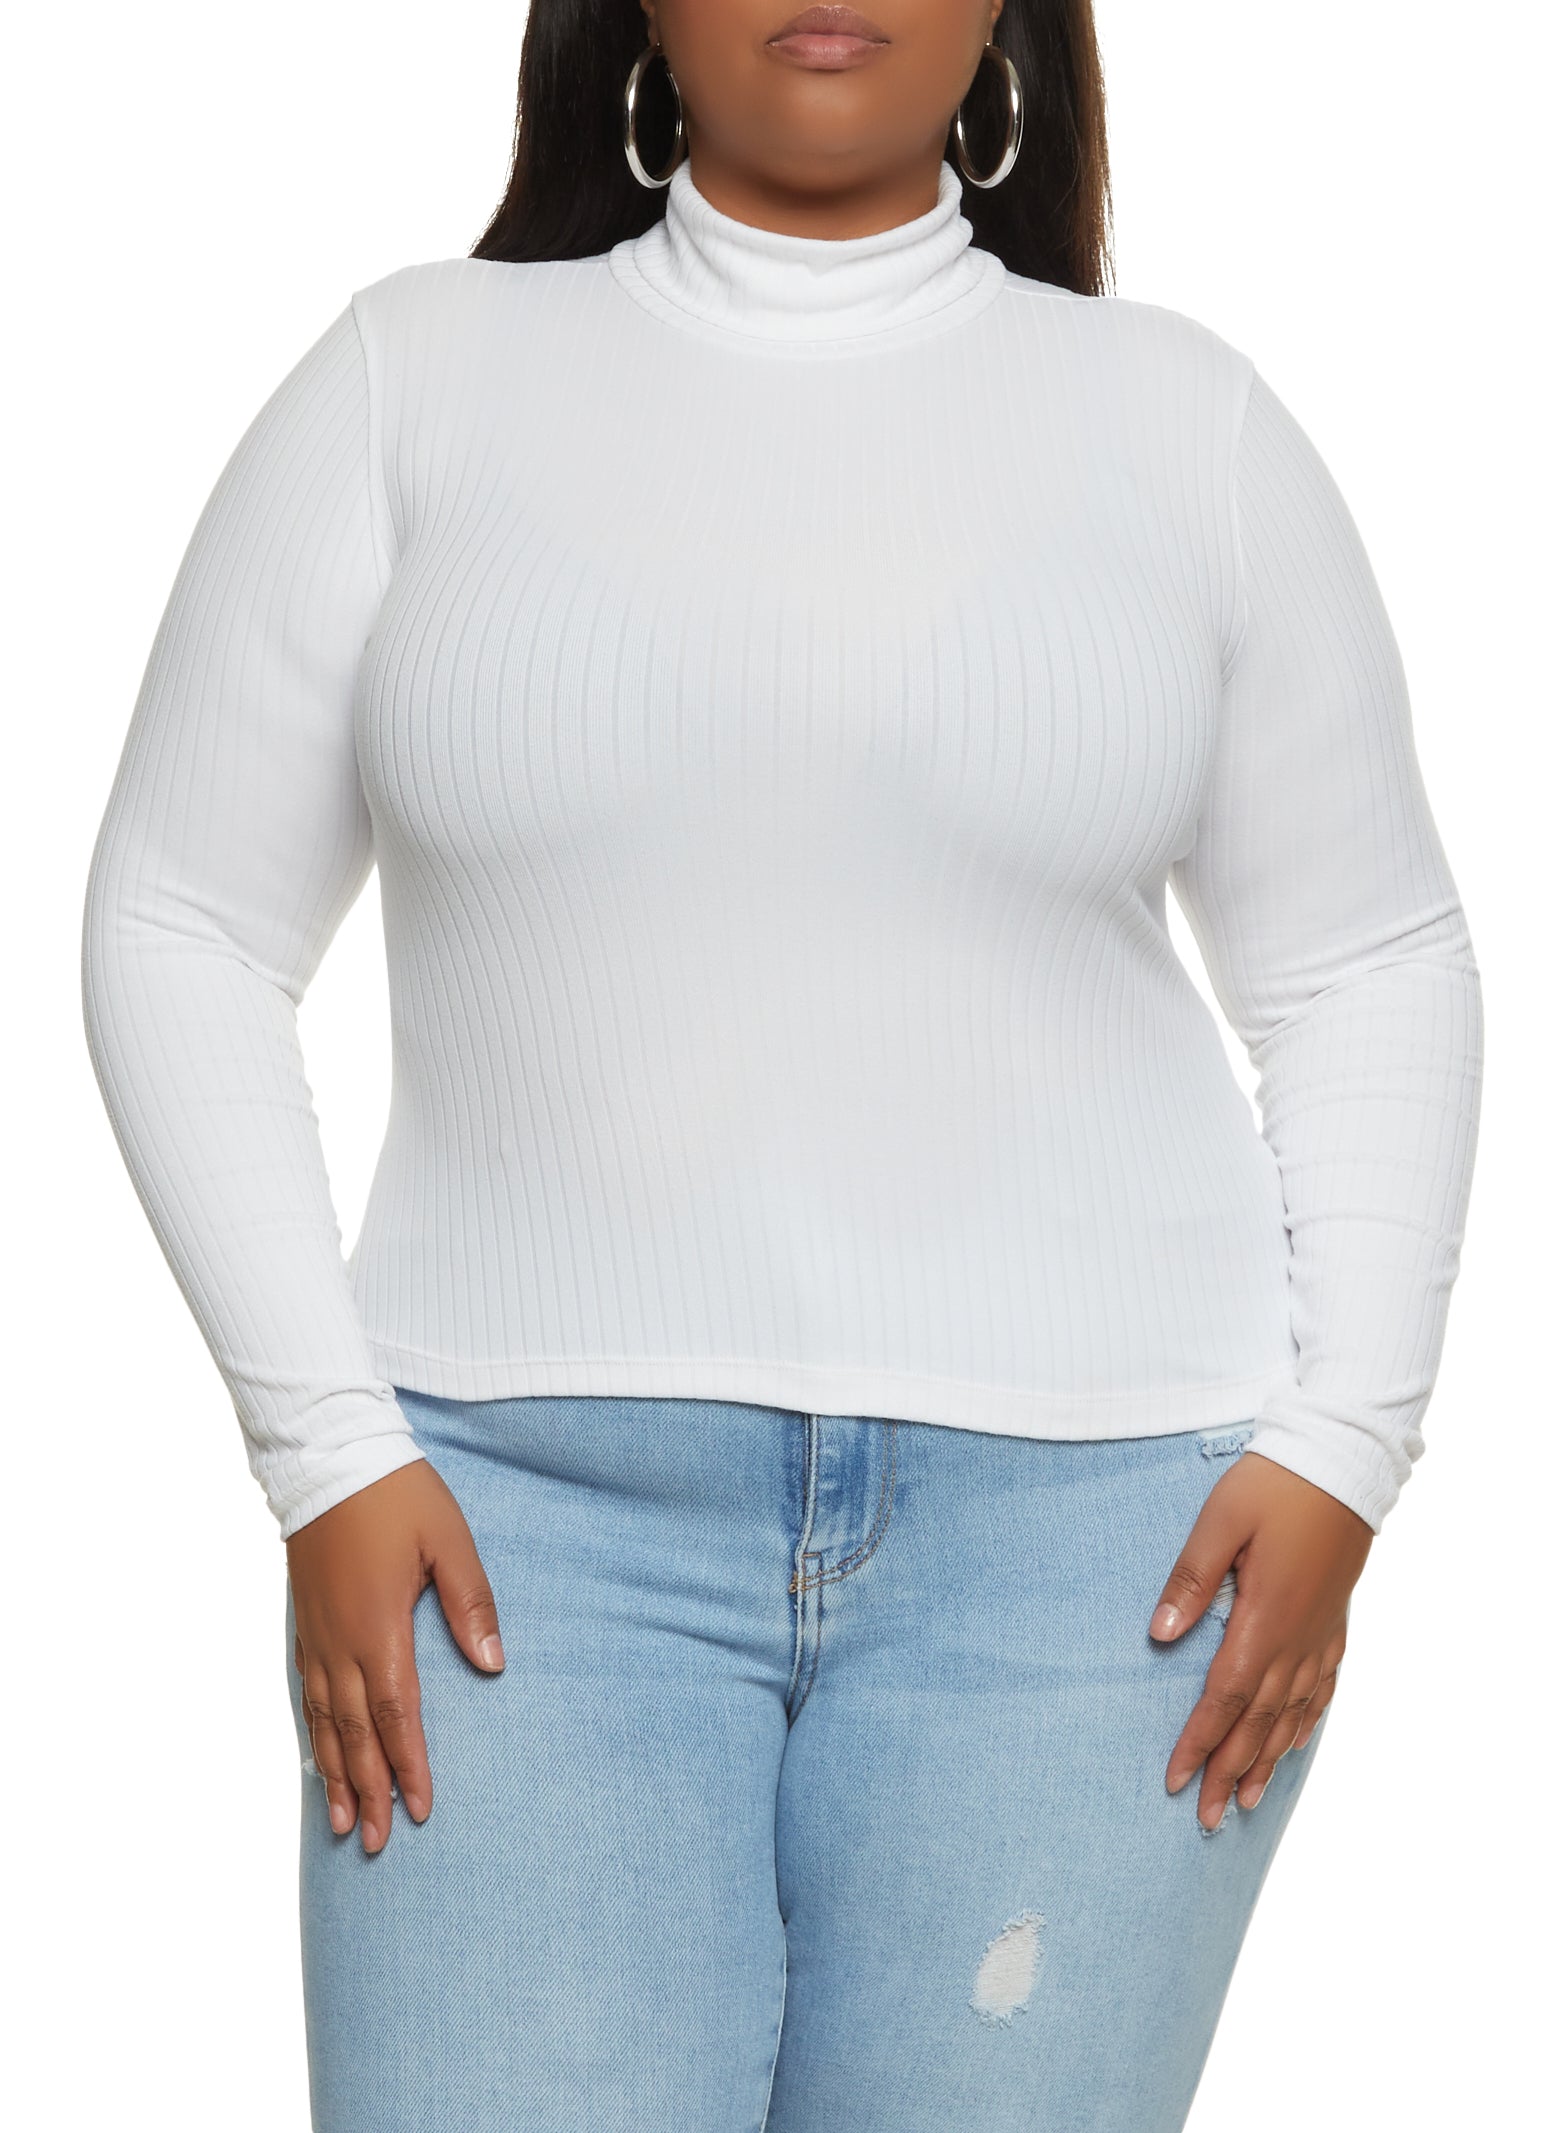 Womens Plus Size Basic Ribbed Knit Turtleneck Top, White, Size 1X